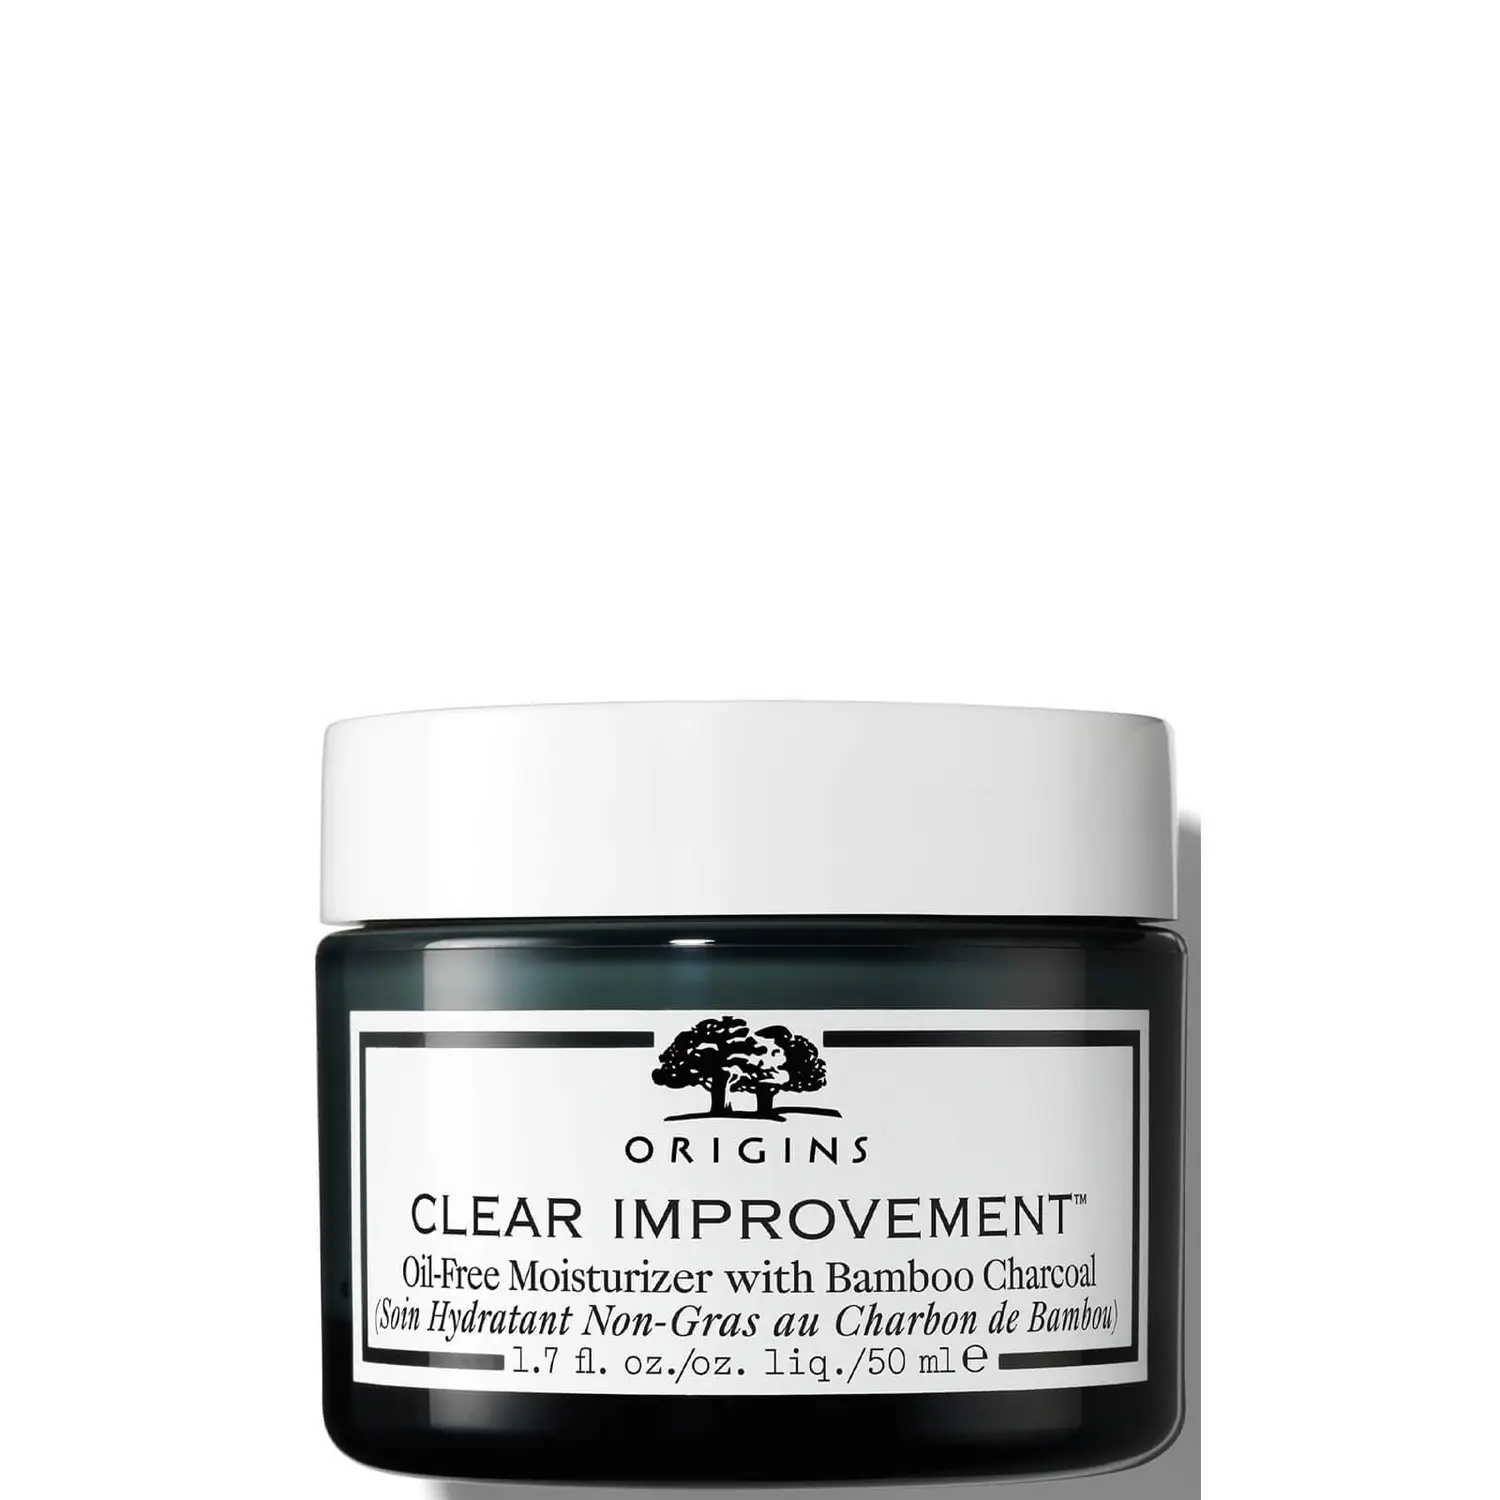 https://www.lookfantastic.com/origins-clear-improvement-oil-free-moisturiser-with-bamboo-charcoal-50ml/12193029.html